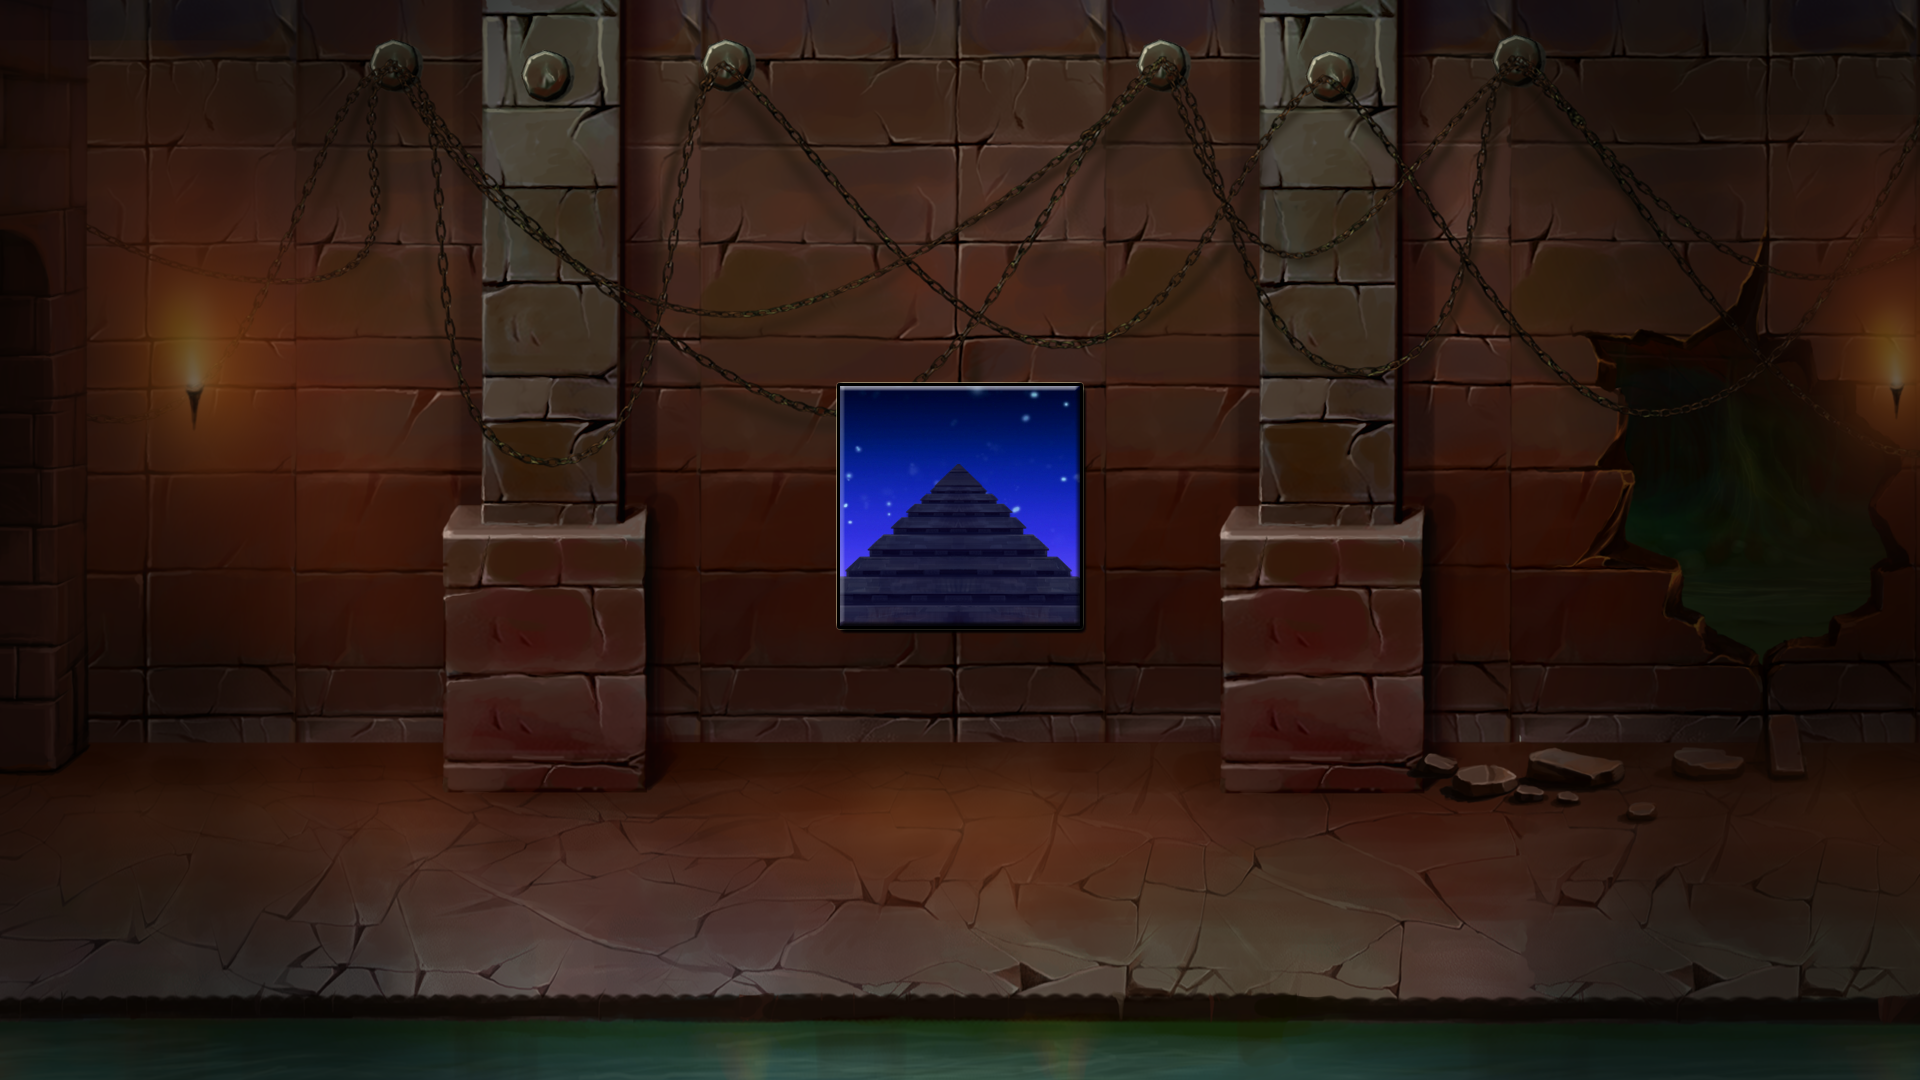 Icon for Pyramid Scheme